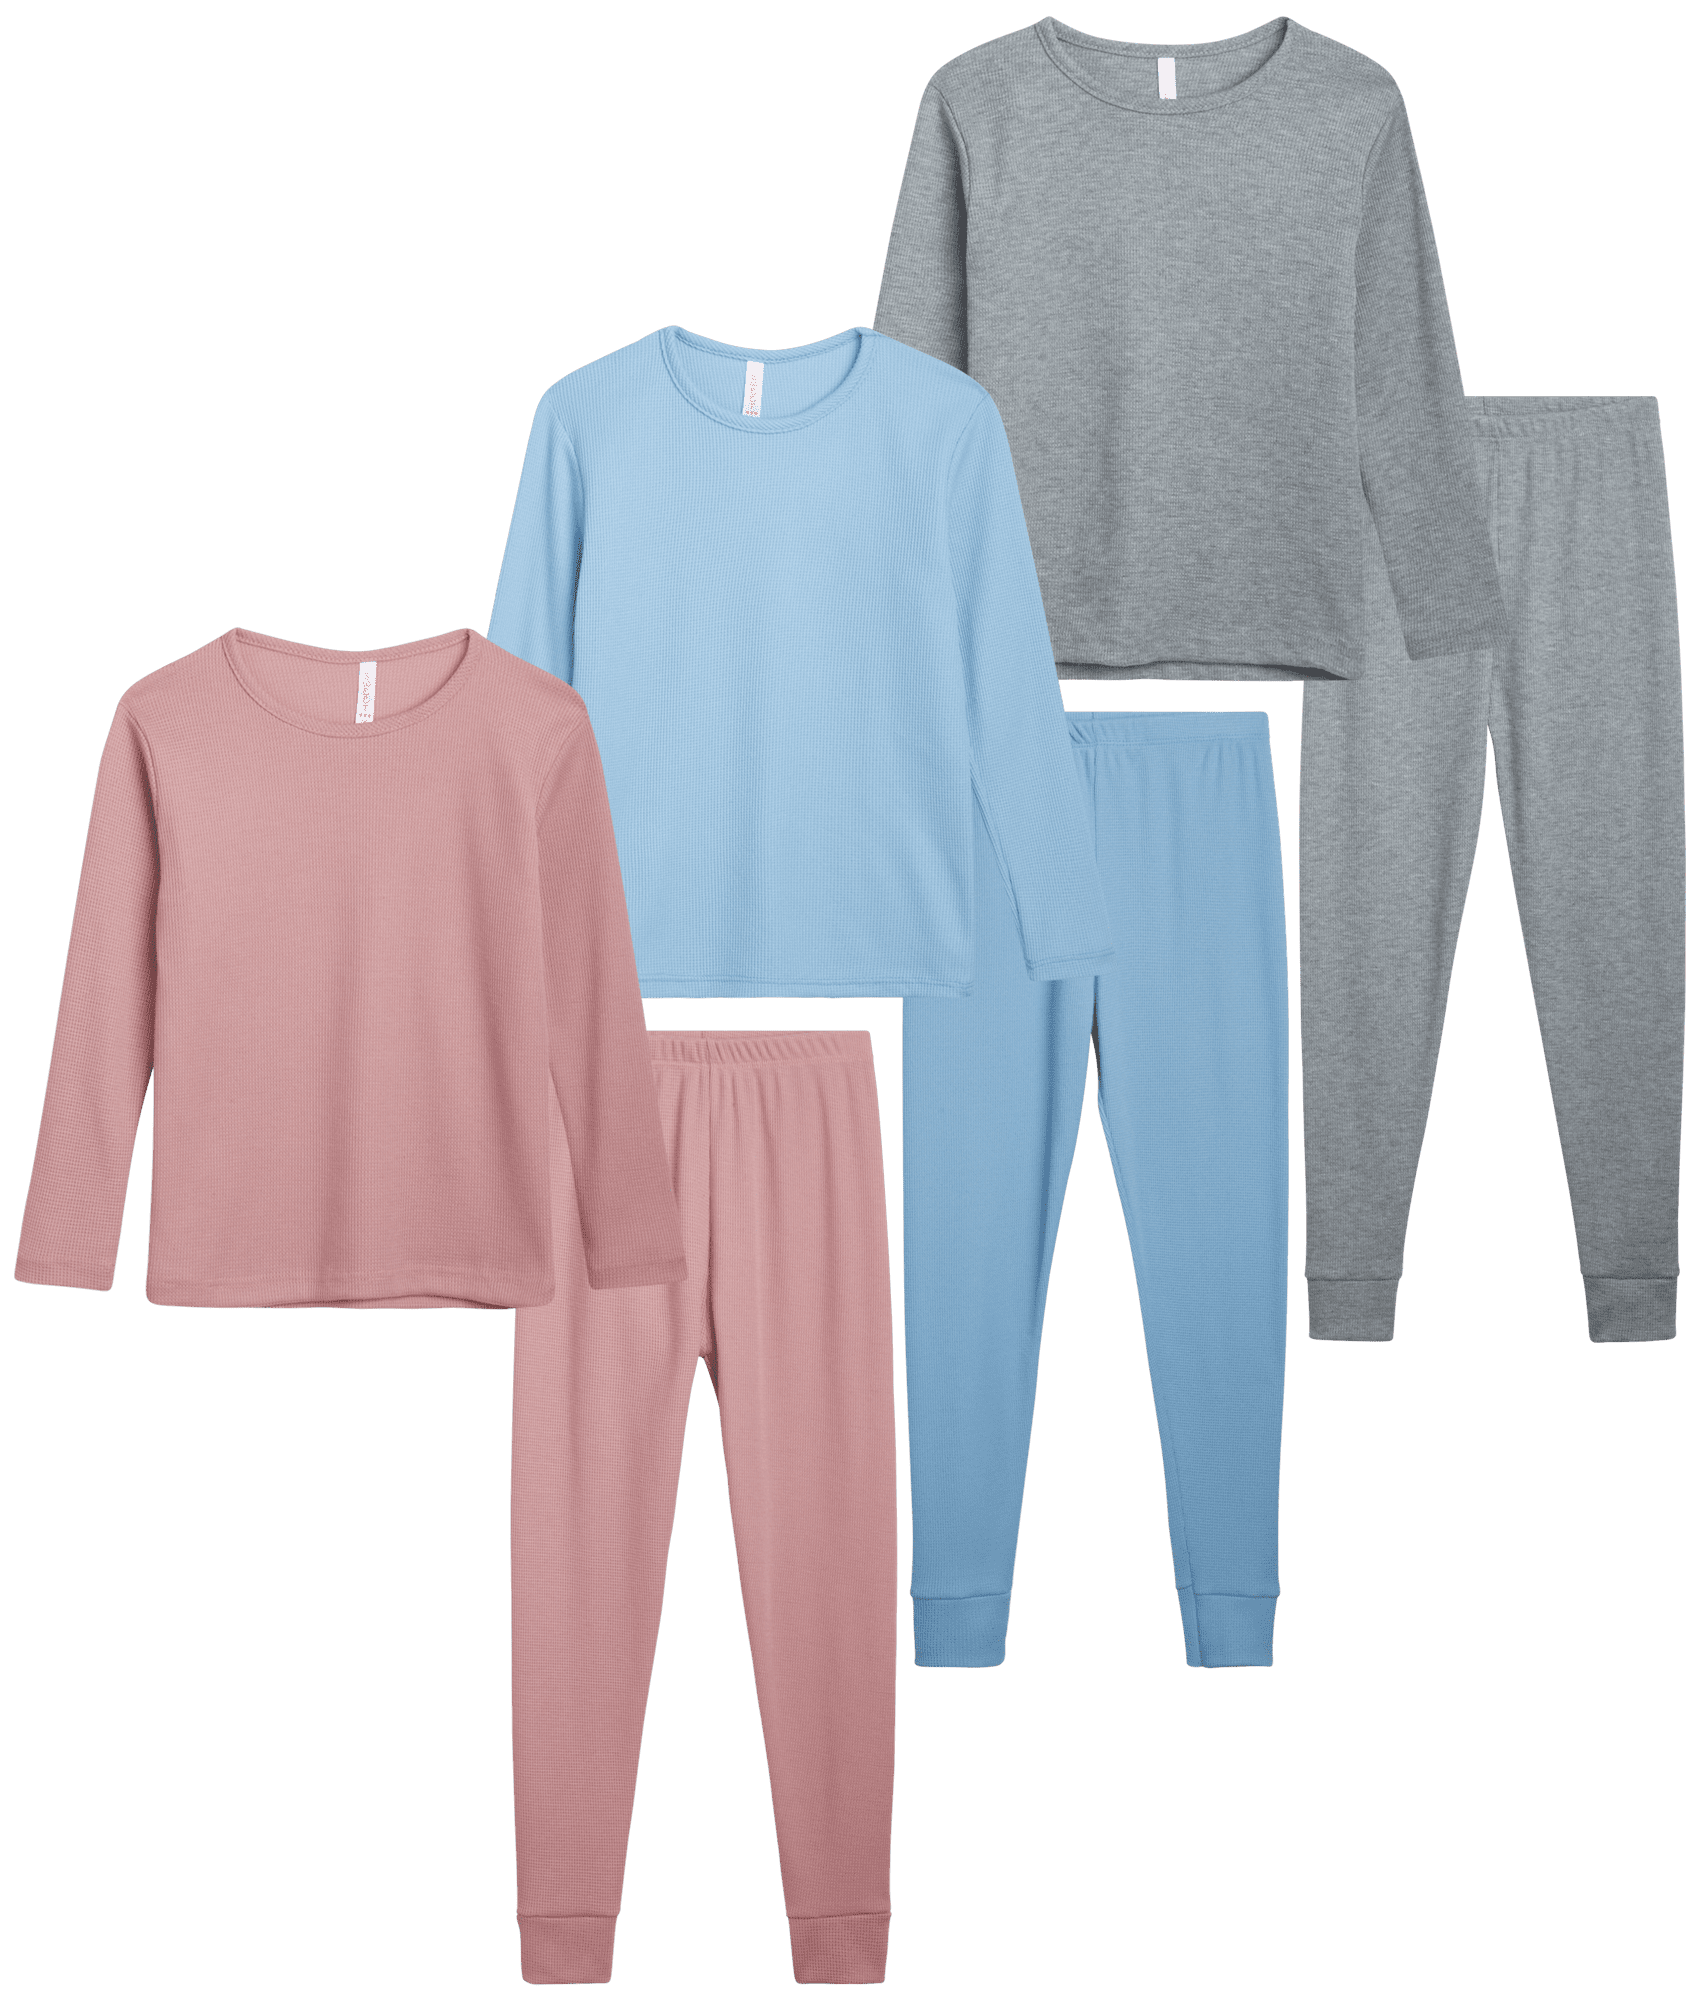 Sweet Hearts Girls’ Thermal Underwear Set – 6 Piece Waffle Knit Top ...